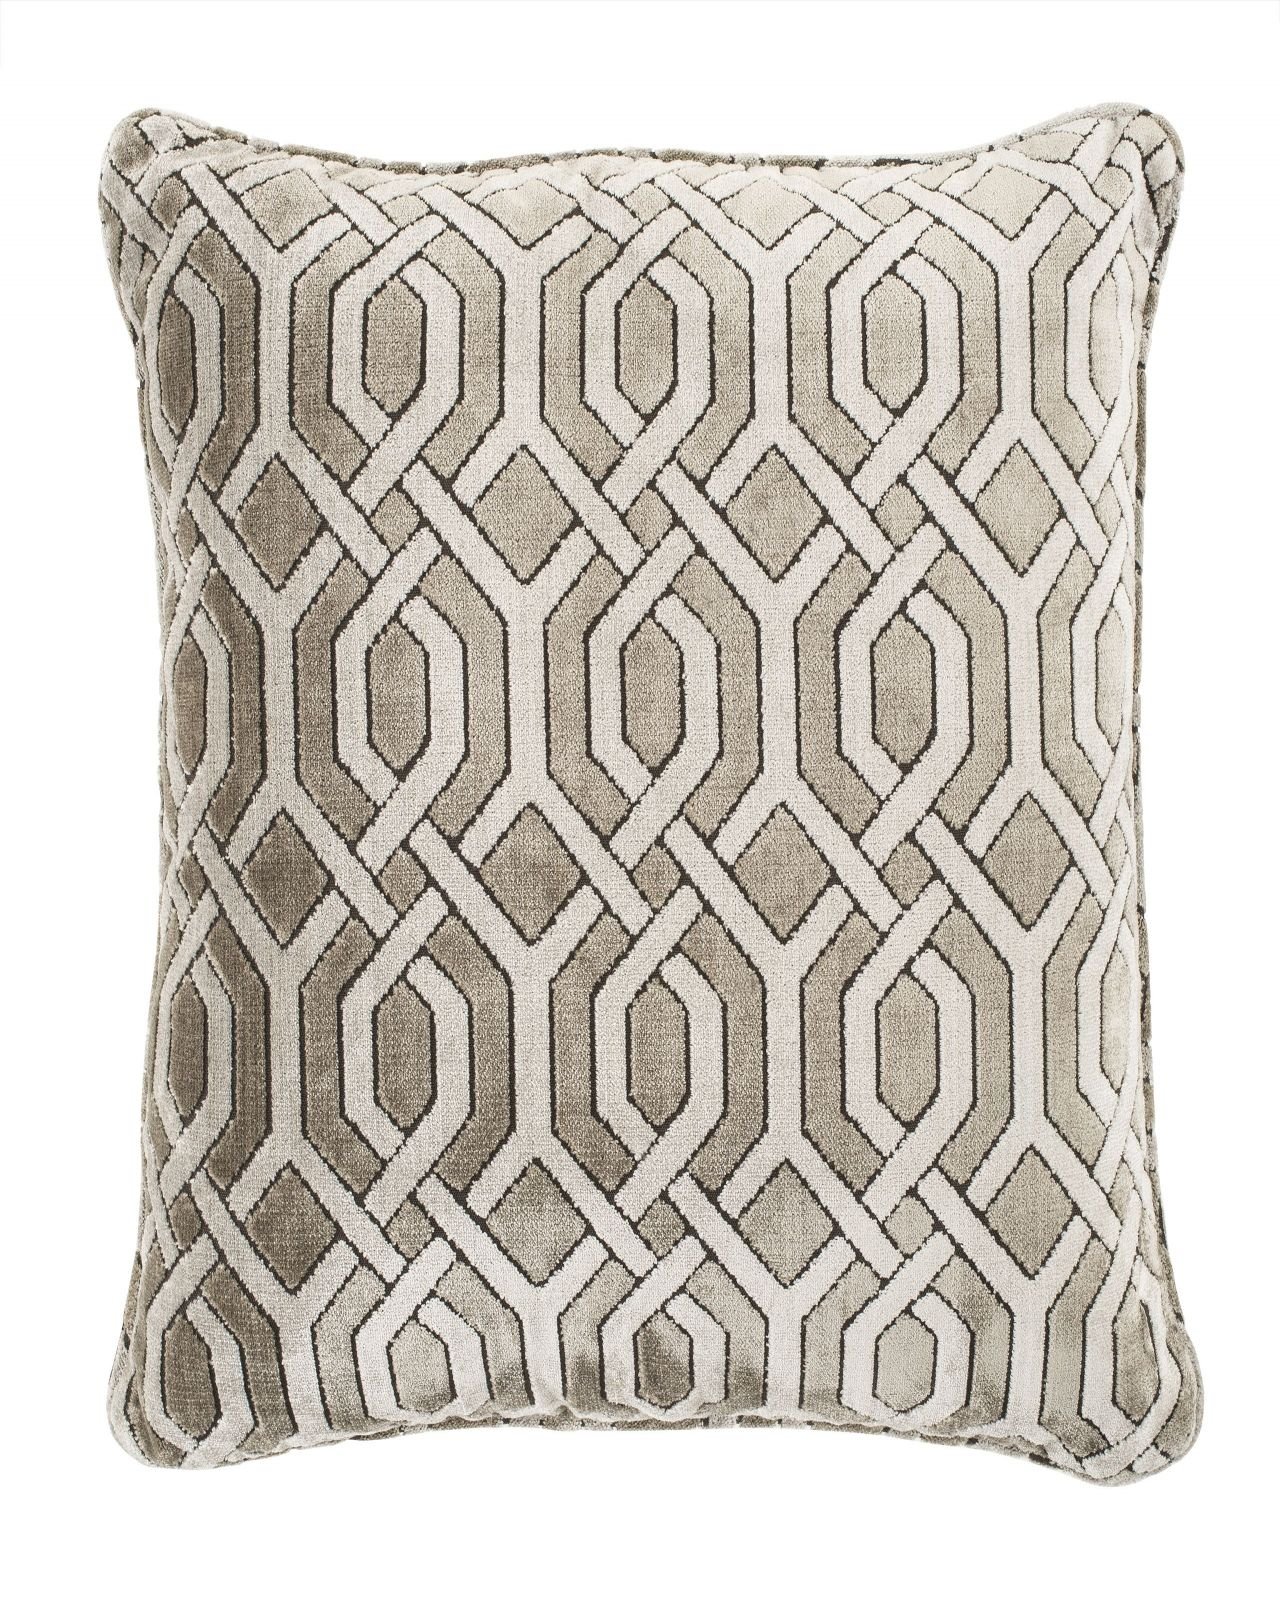 Trellis cushion gray